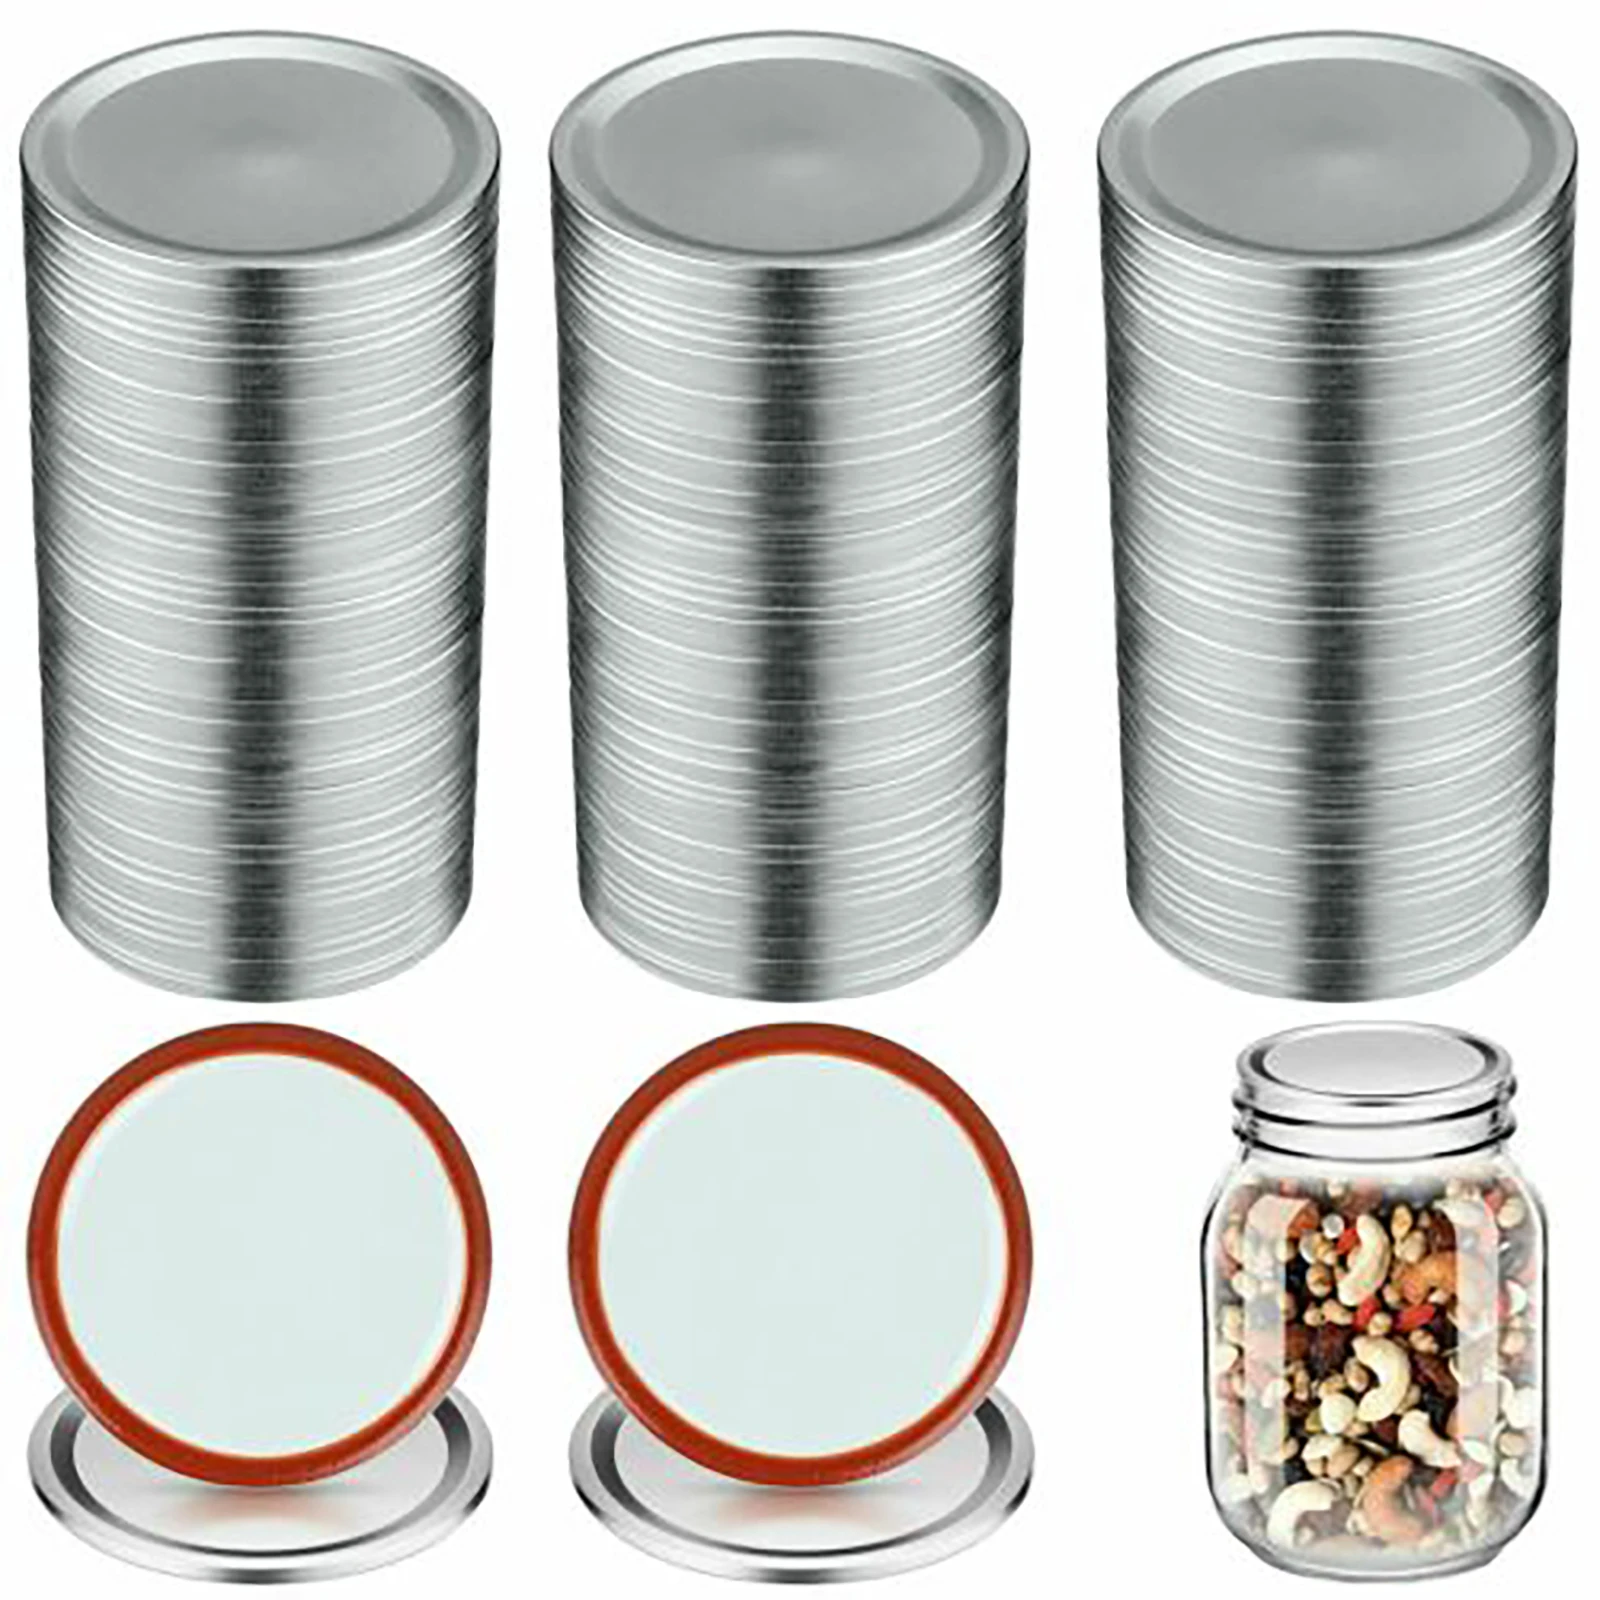 100pcs Regular Mouth Canning Lids 70mm Mason Jar Canning Lids Leak Proof Lids Glass Jar Canned Lid